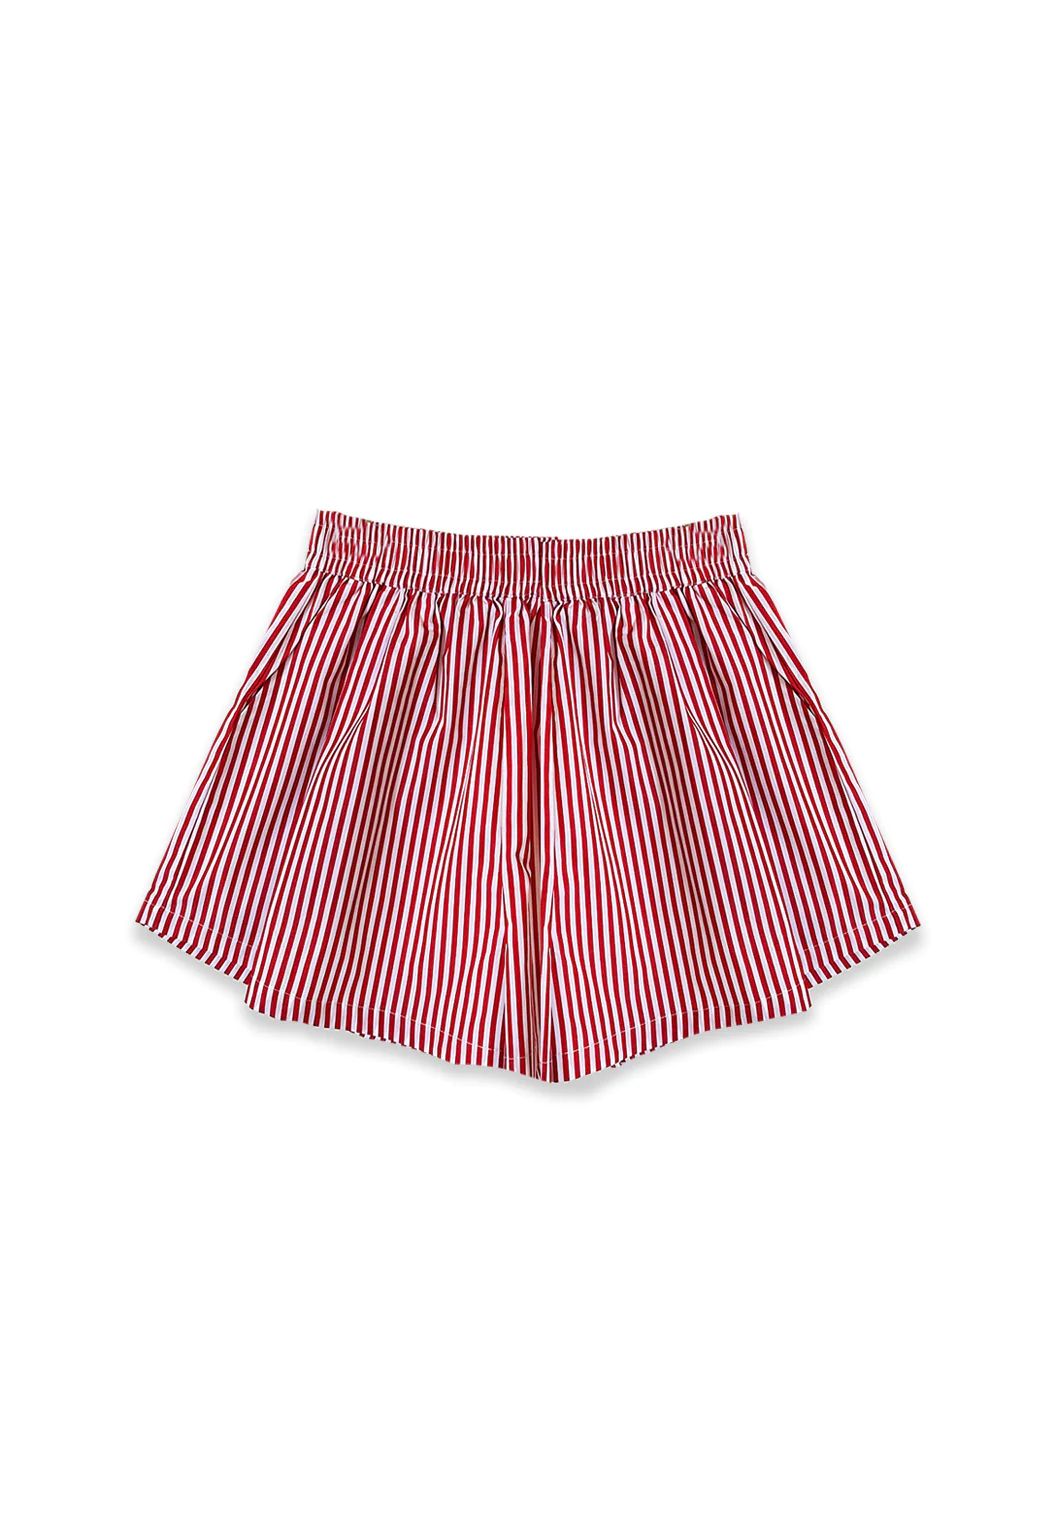 Everyday Shorts - Red Stripe | Shop BURU